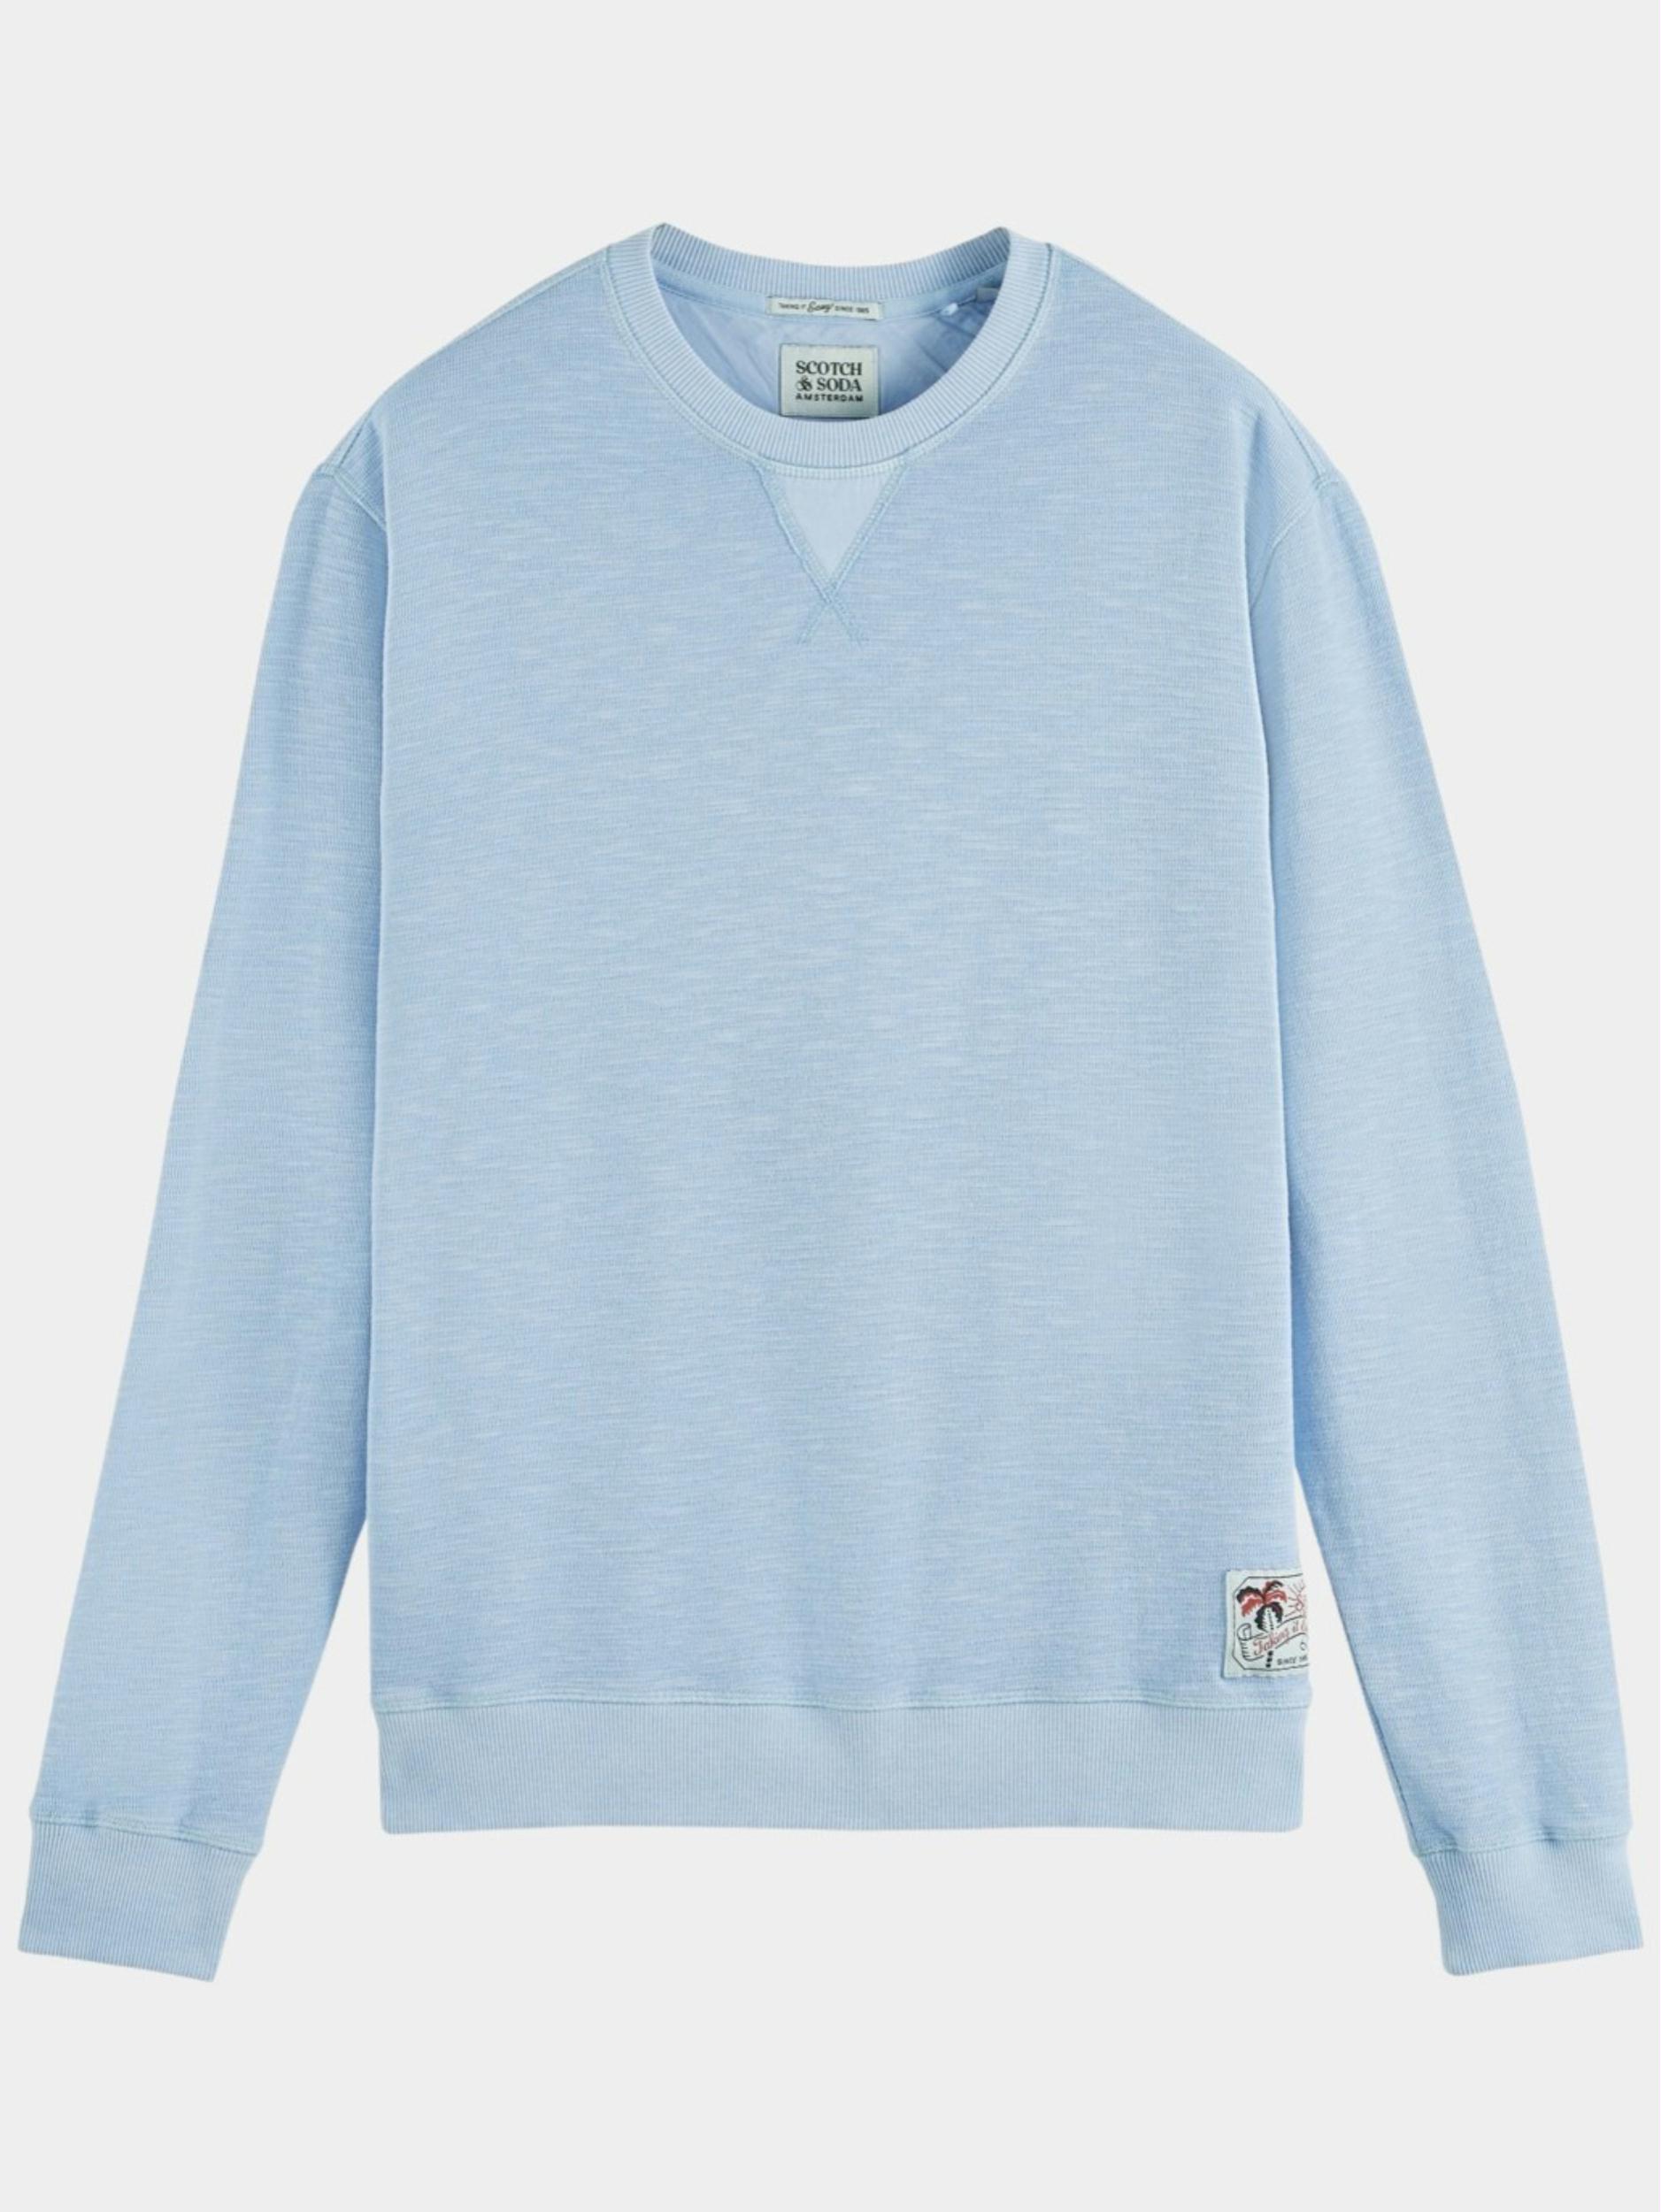 Scotch Soda Sweater Blauw Garment dye structured sweatsh 171652 5609